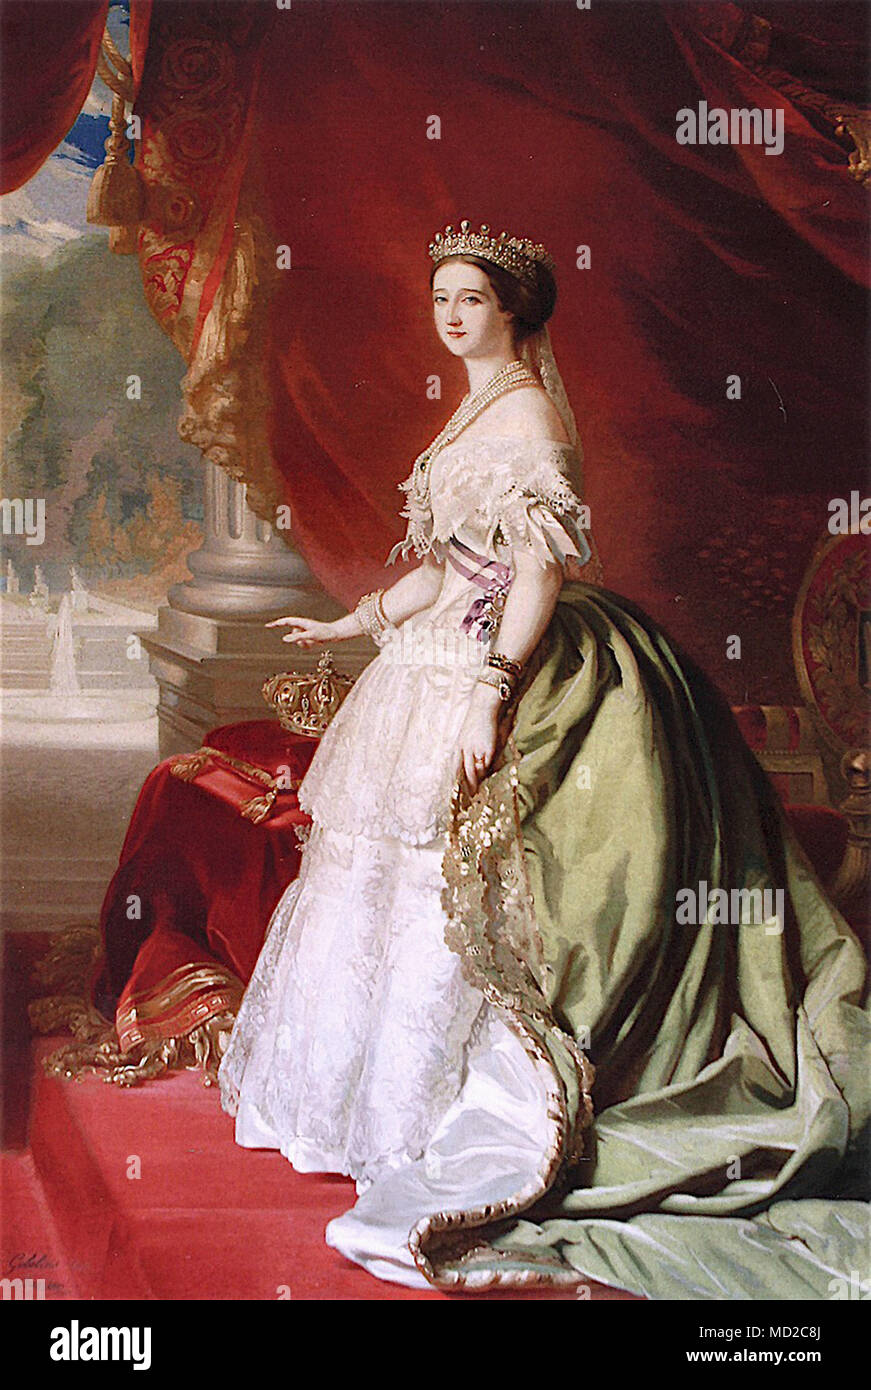 Empress Eugenie as Marie Antoinette